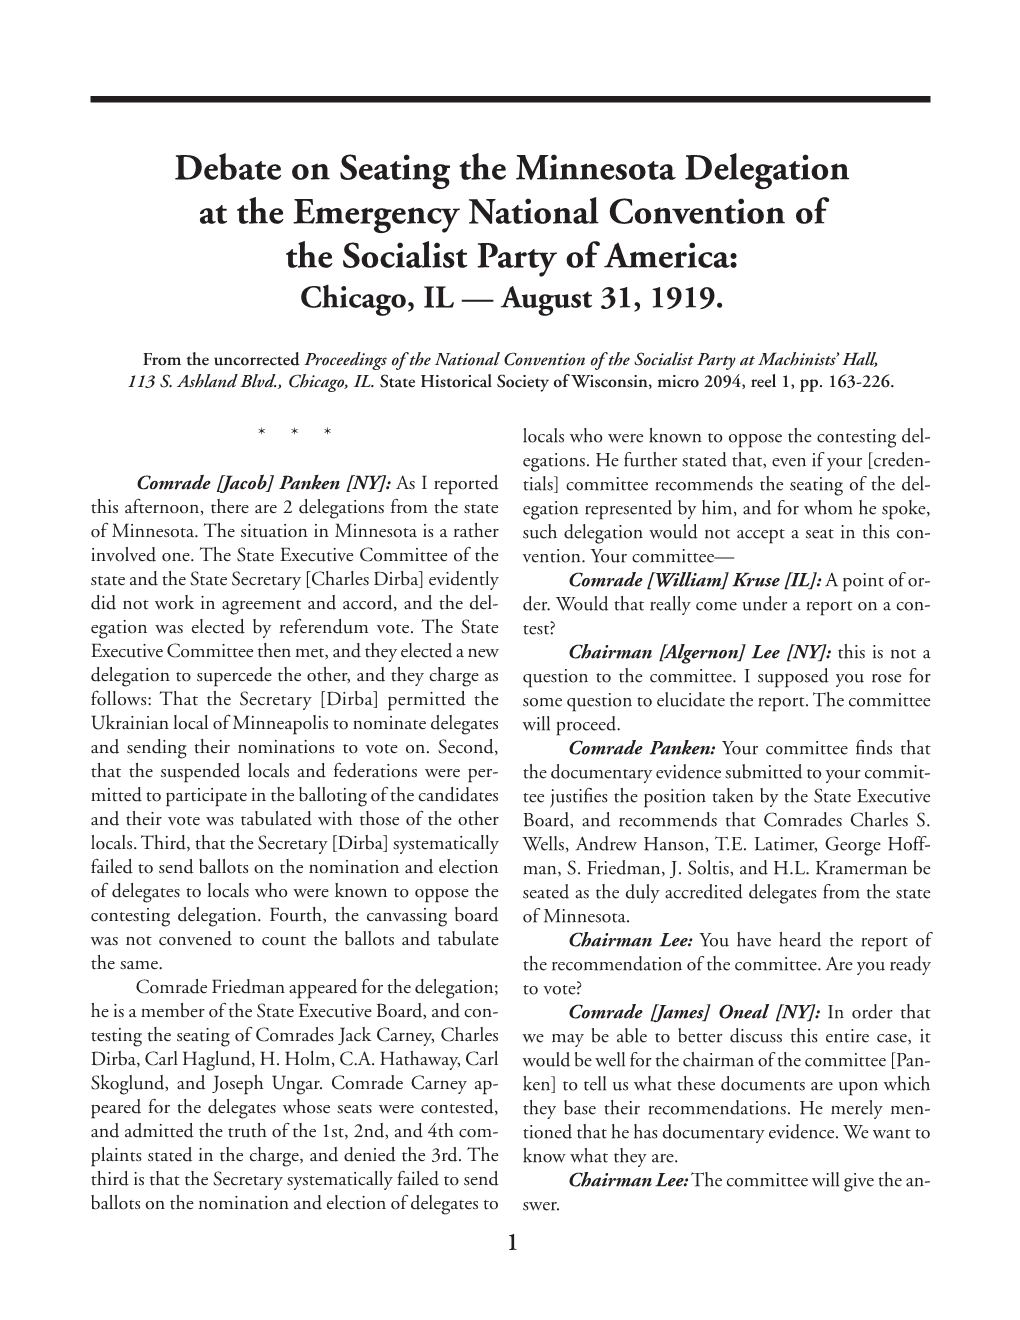 Debate on Seating the Minnesota Delegation [Aug